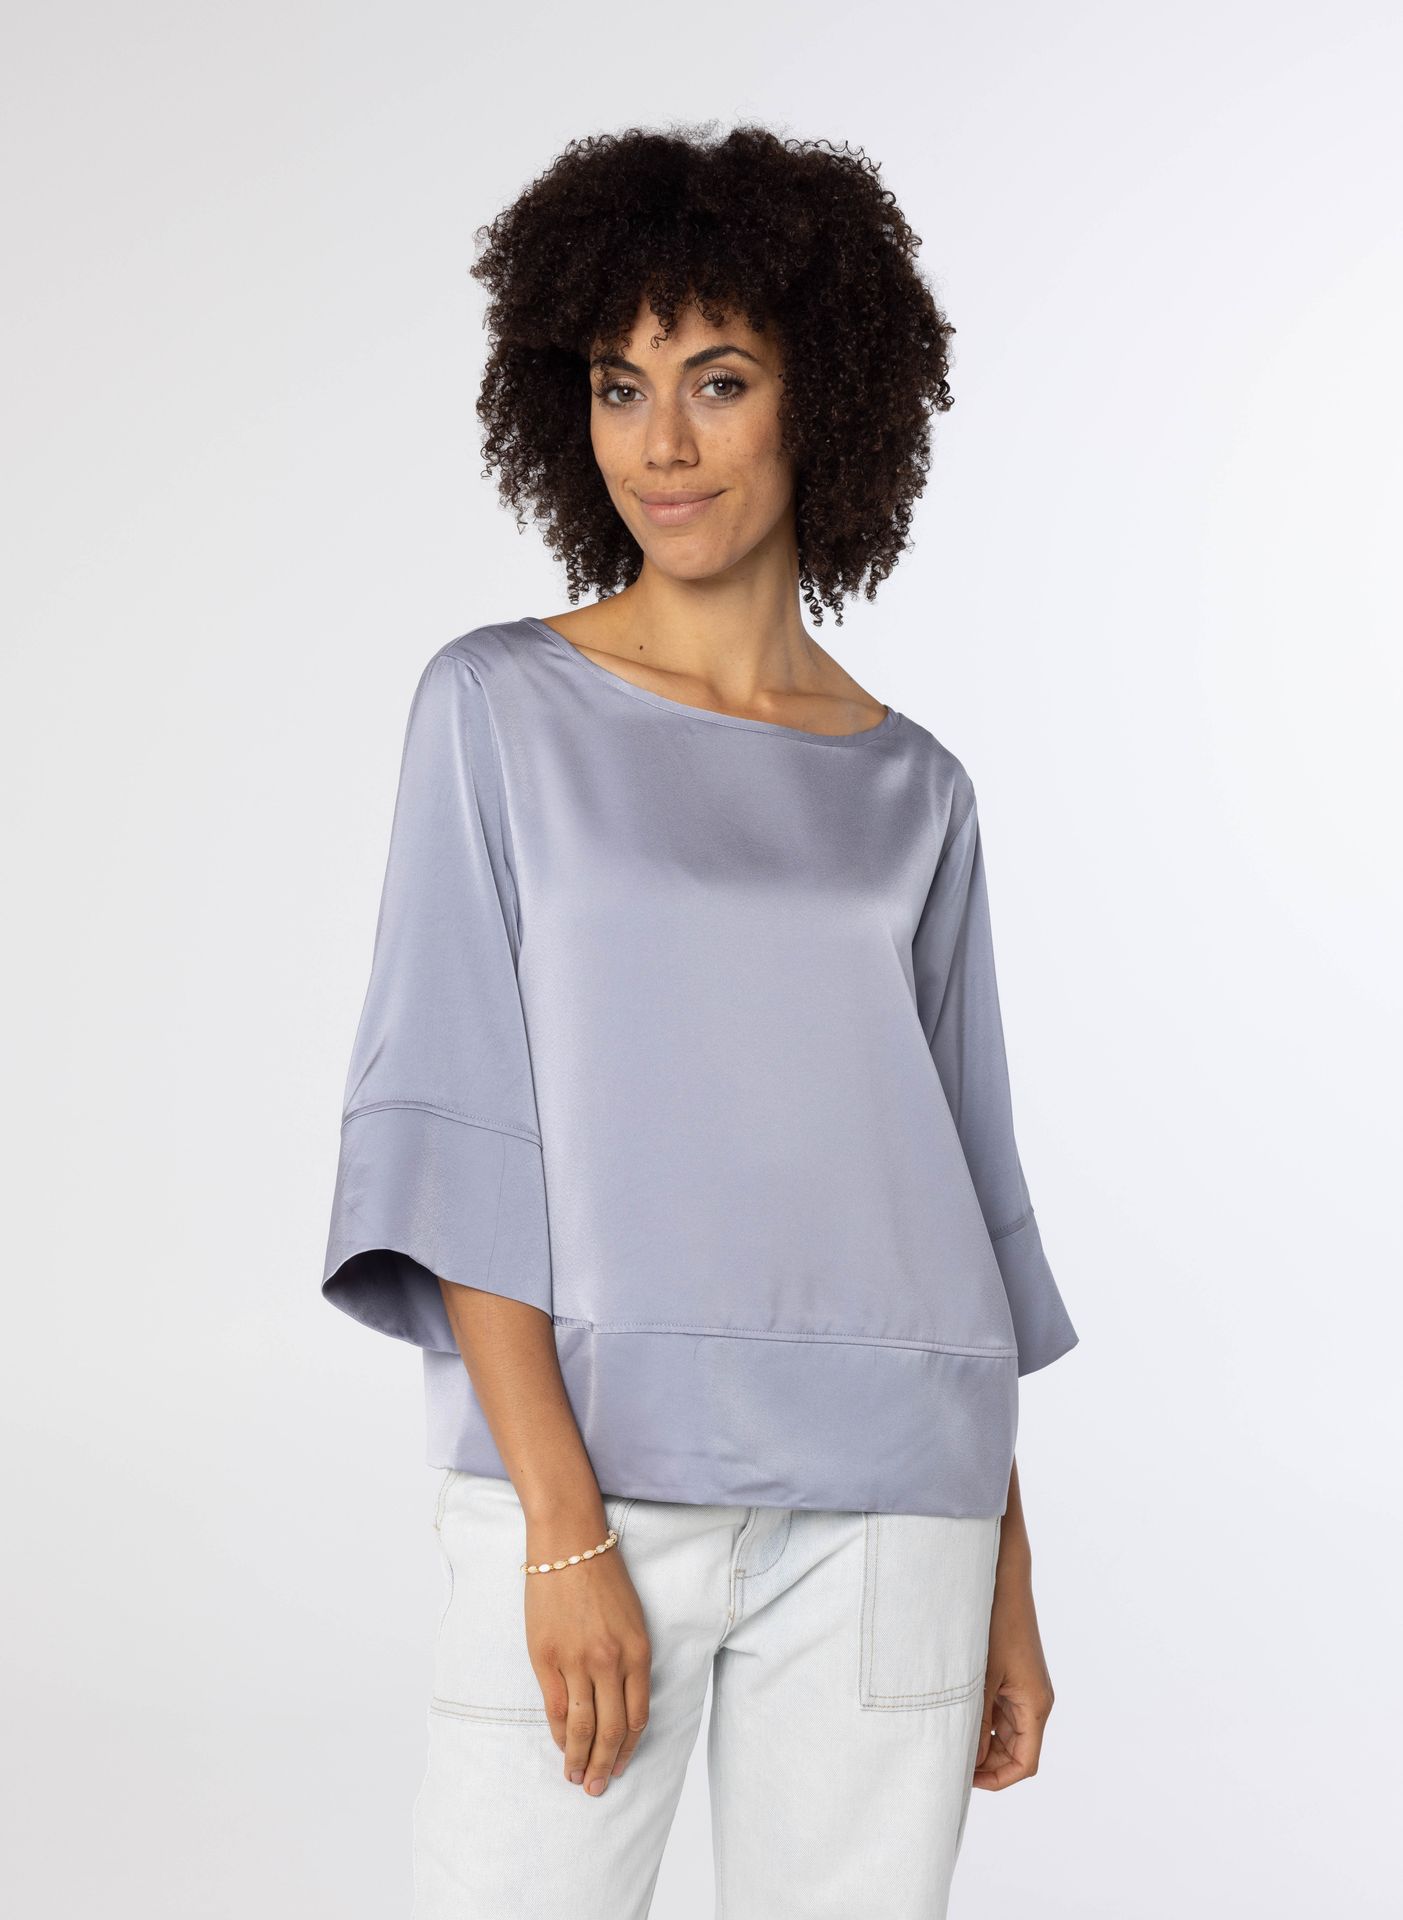 Norah Glanzende blouse grey/blue 214154-074